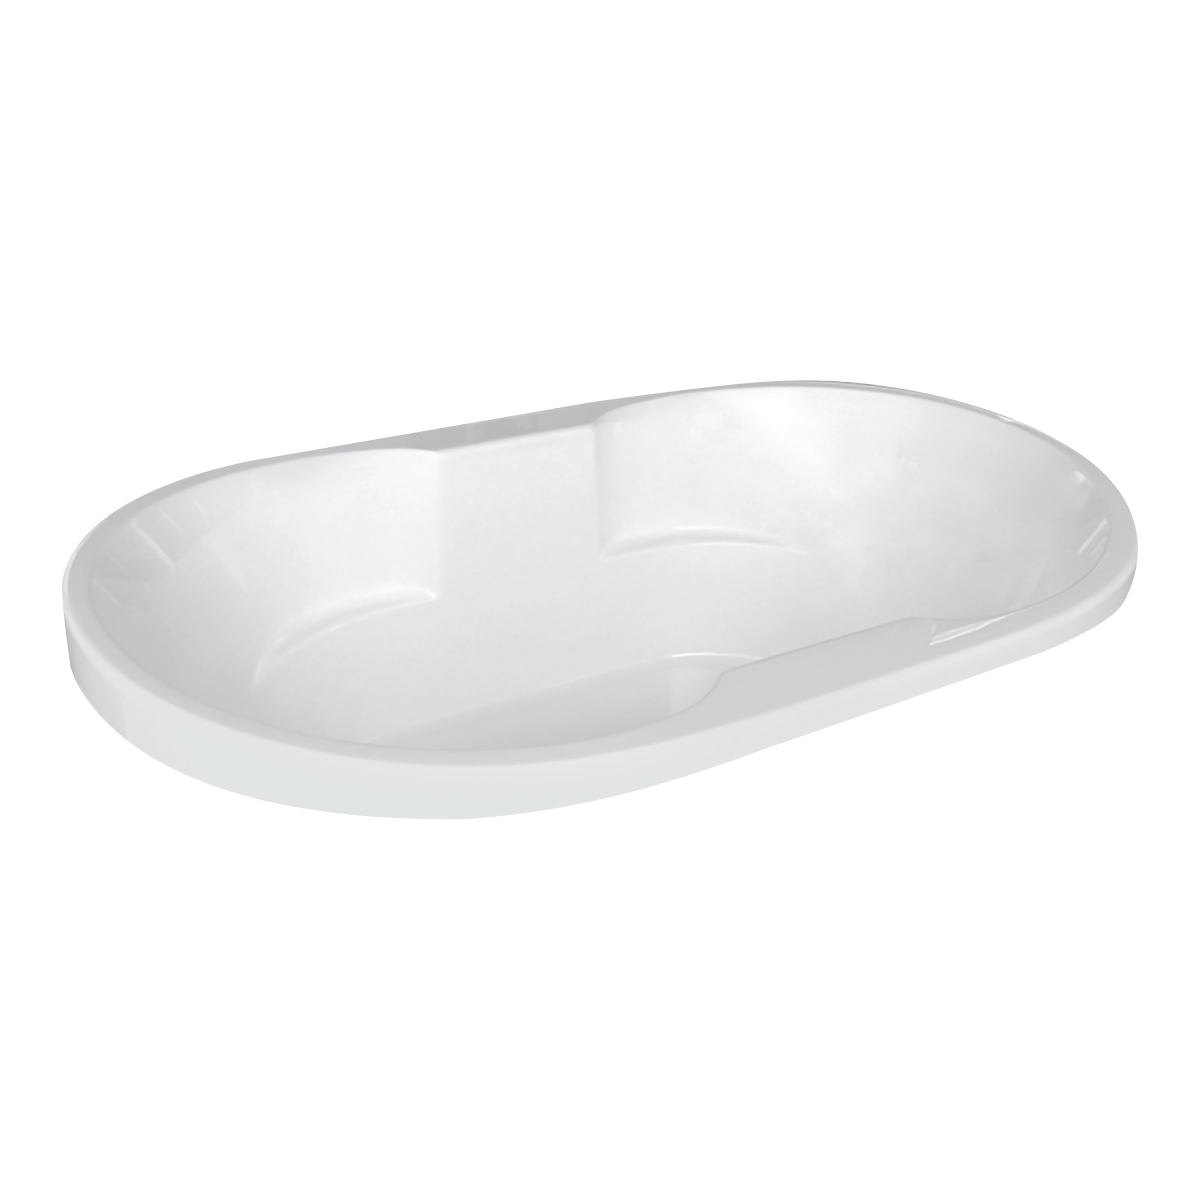 Neptune6636diwht 66 X 36 In. Contemporary Oval Acrylic Contoured Drop-in Bath Tub, White